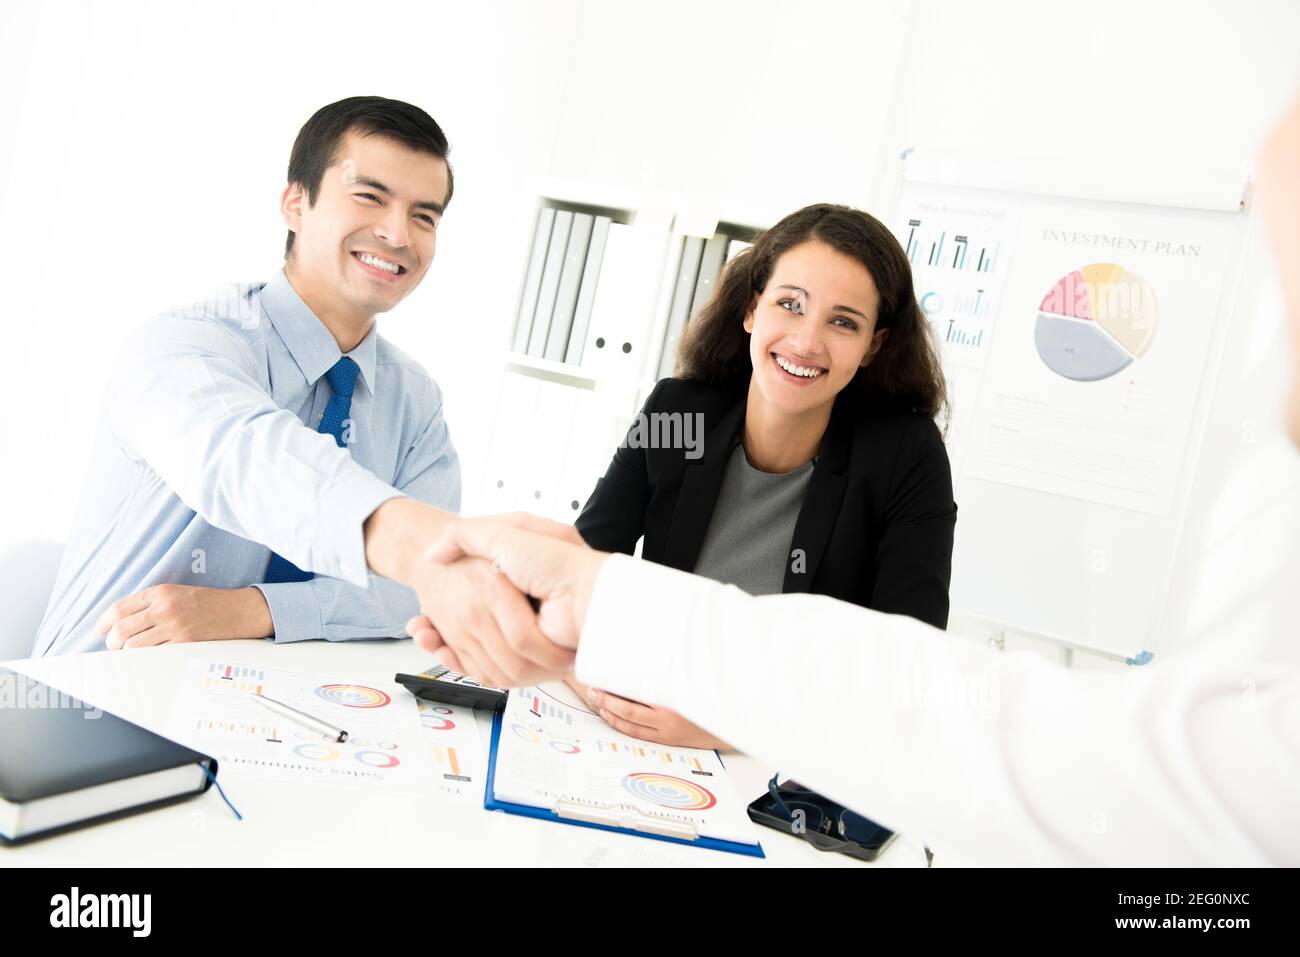 Businessmen making handshake in meeting room Stock Photo